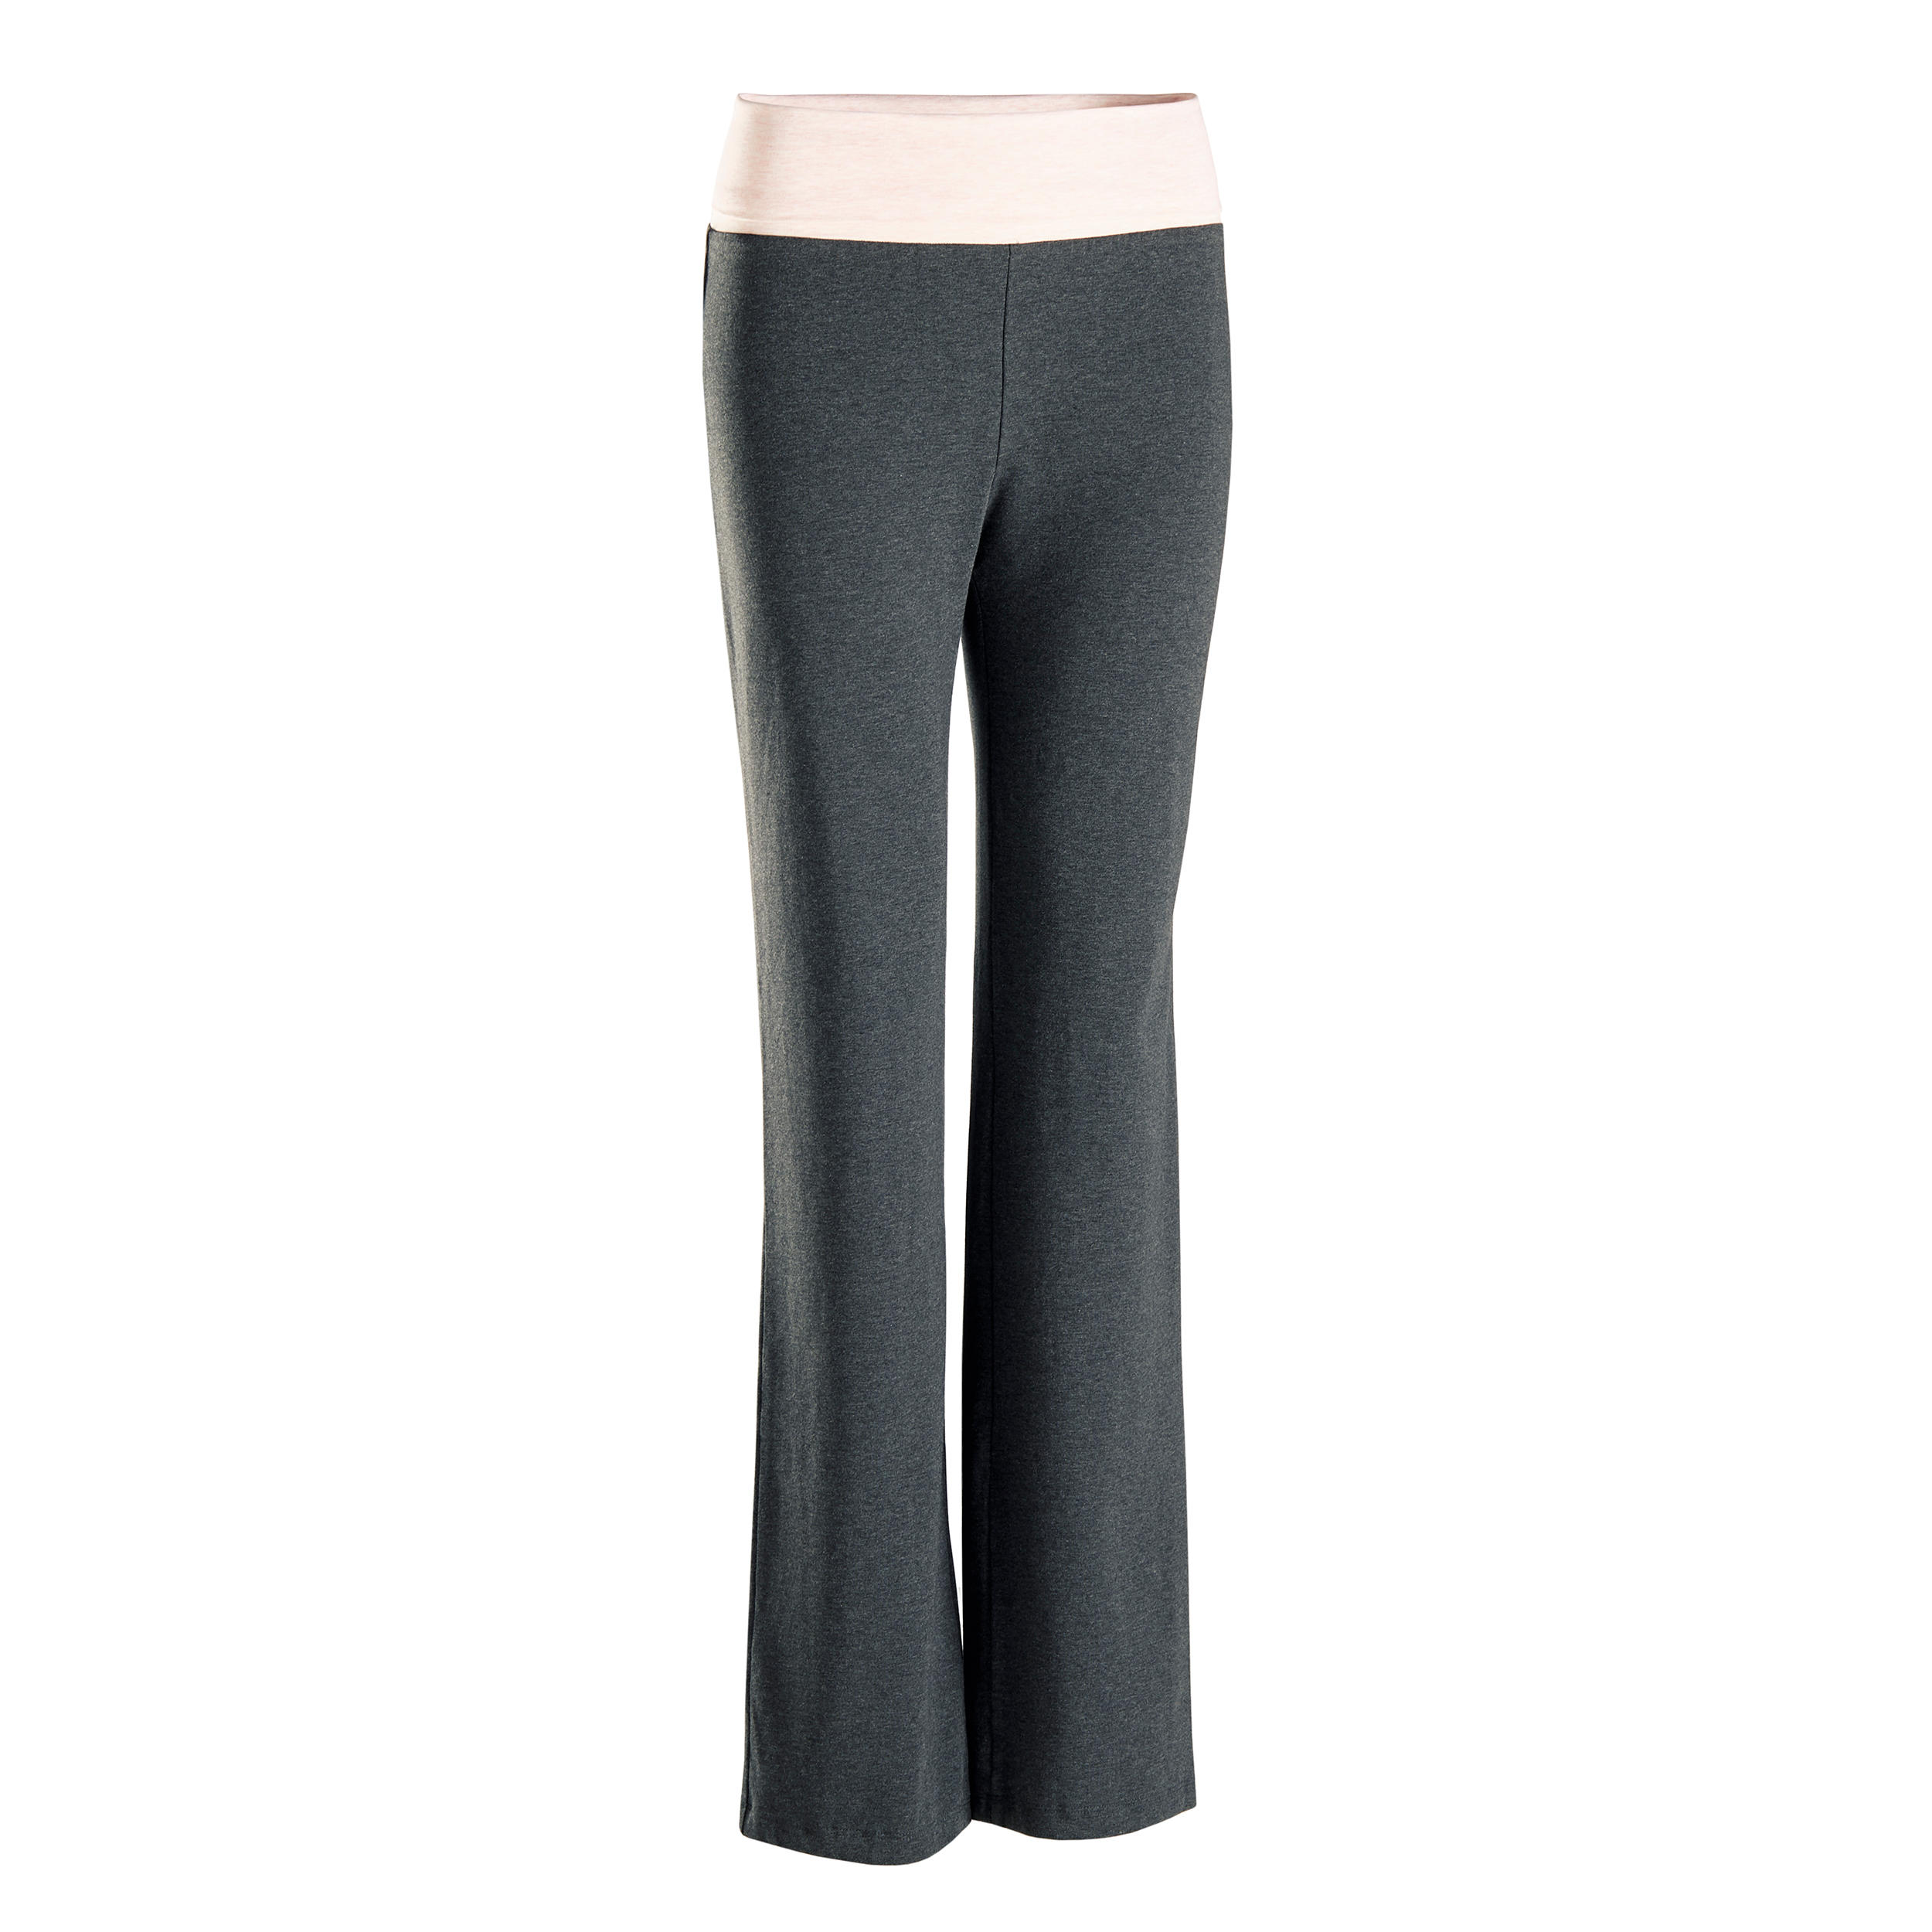 Women's Yoga Cotton Bottoms - Grey/Pink 3/7